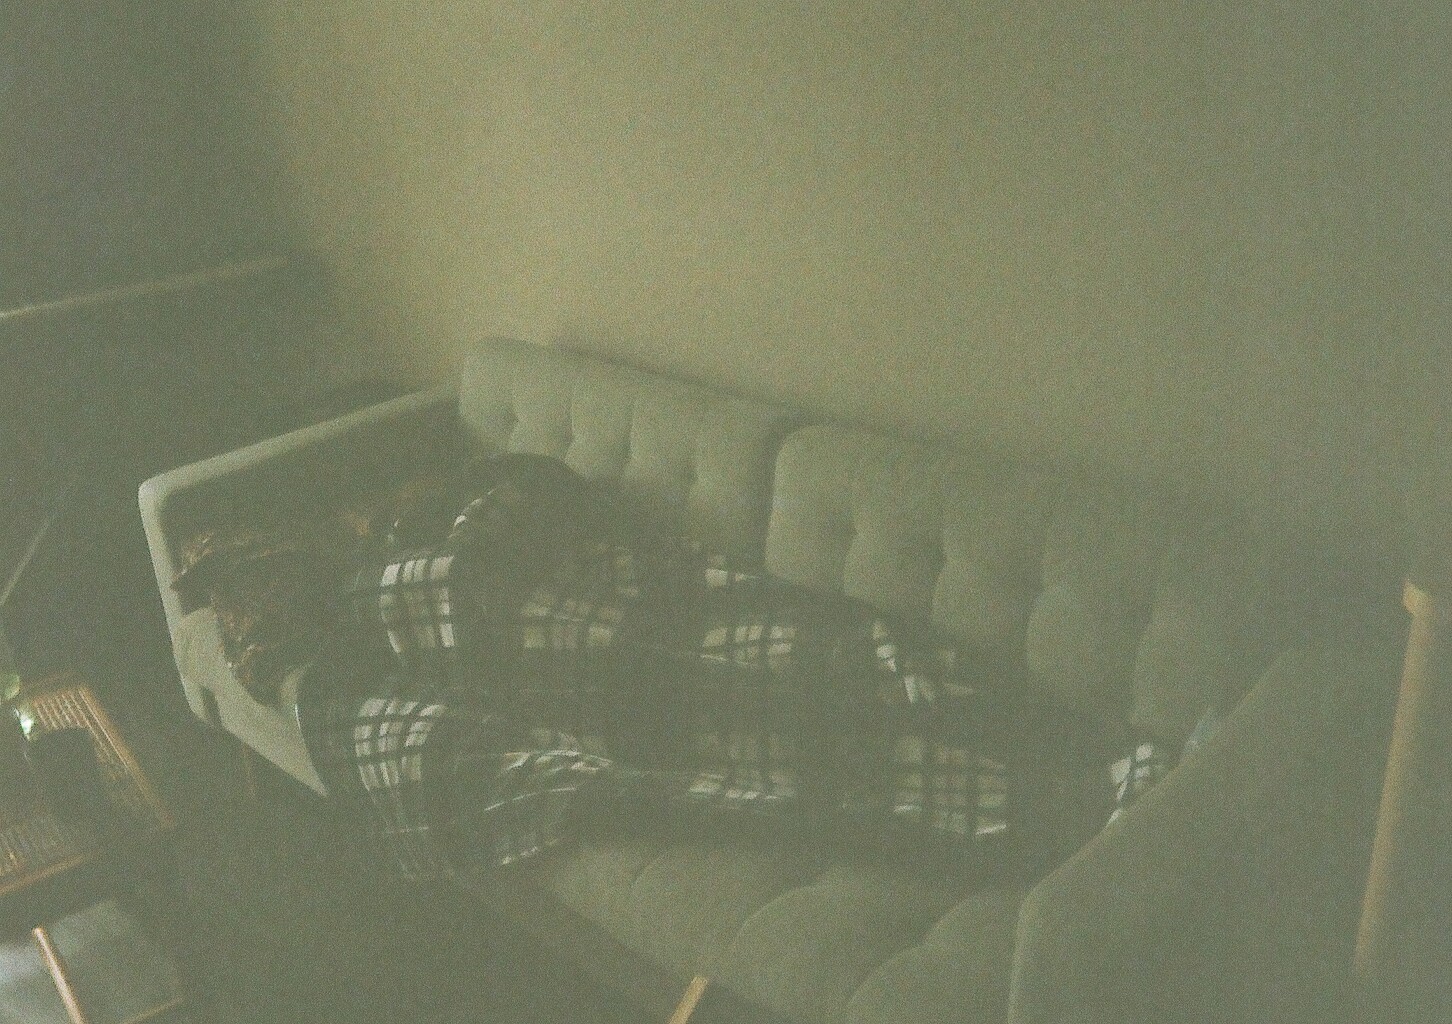 My wife, hidden under a blanket on the sofa